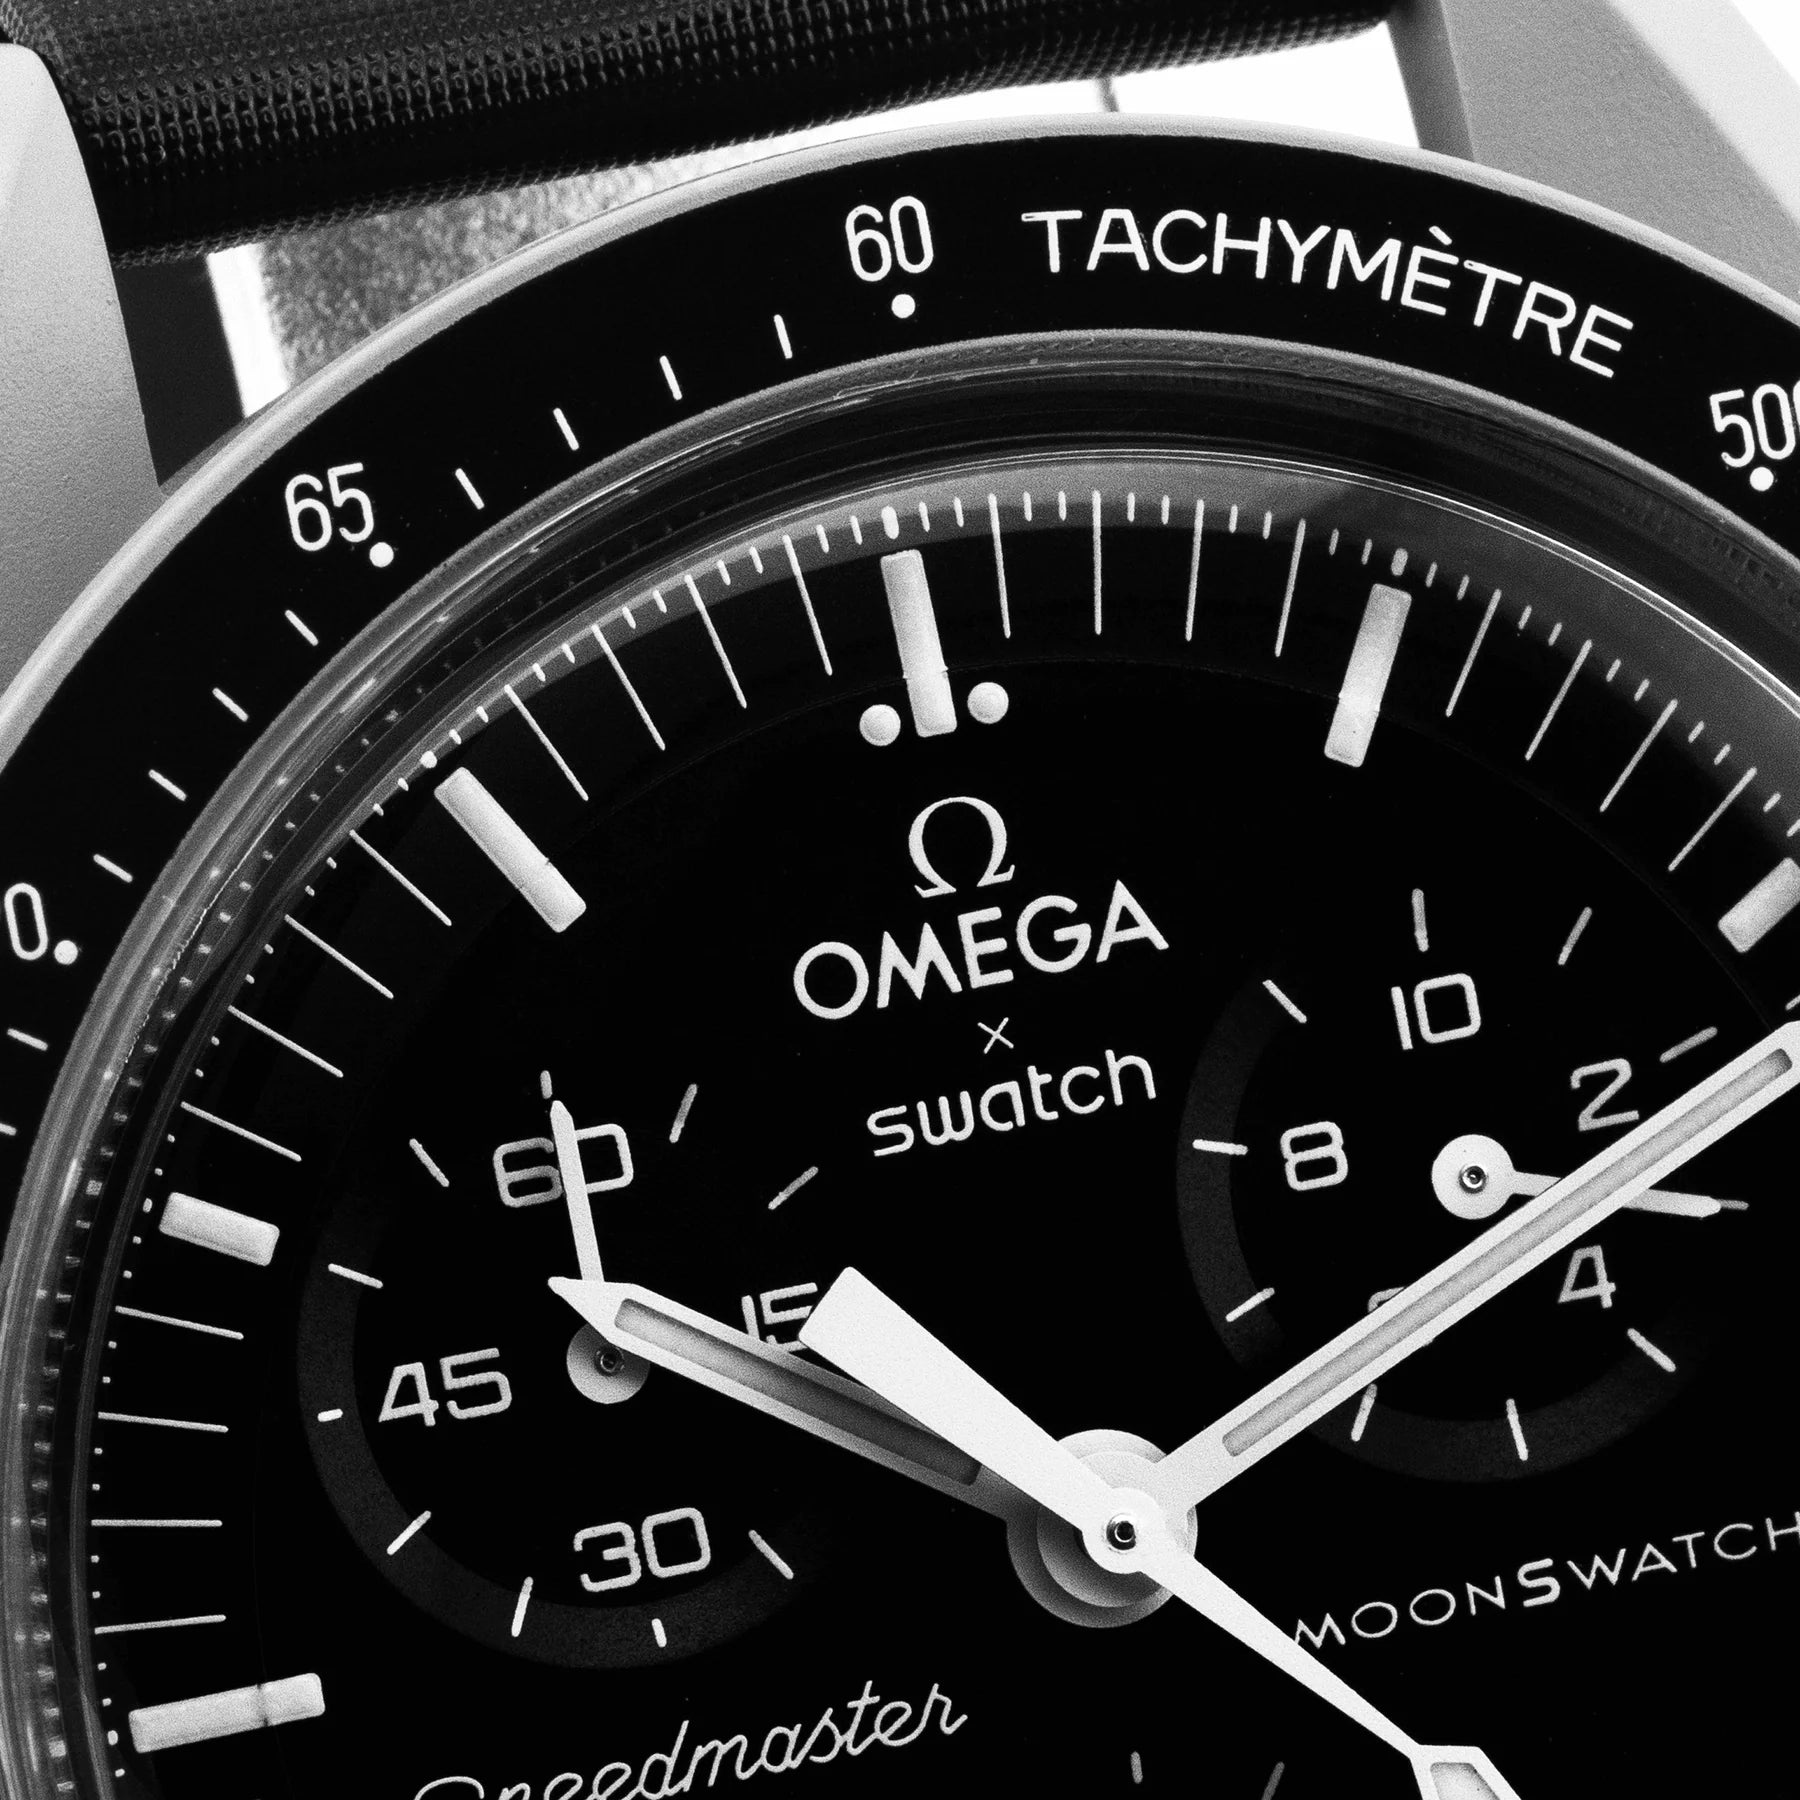 Omega x Swatch Moonswatch Moon